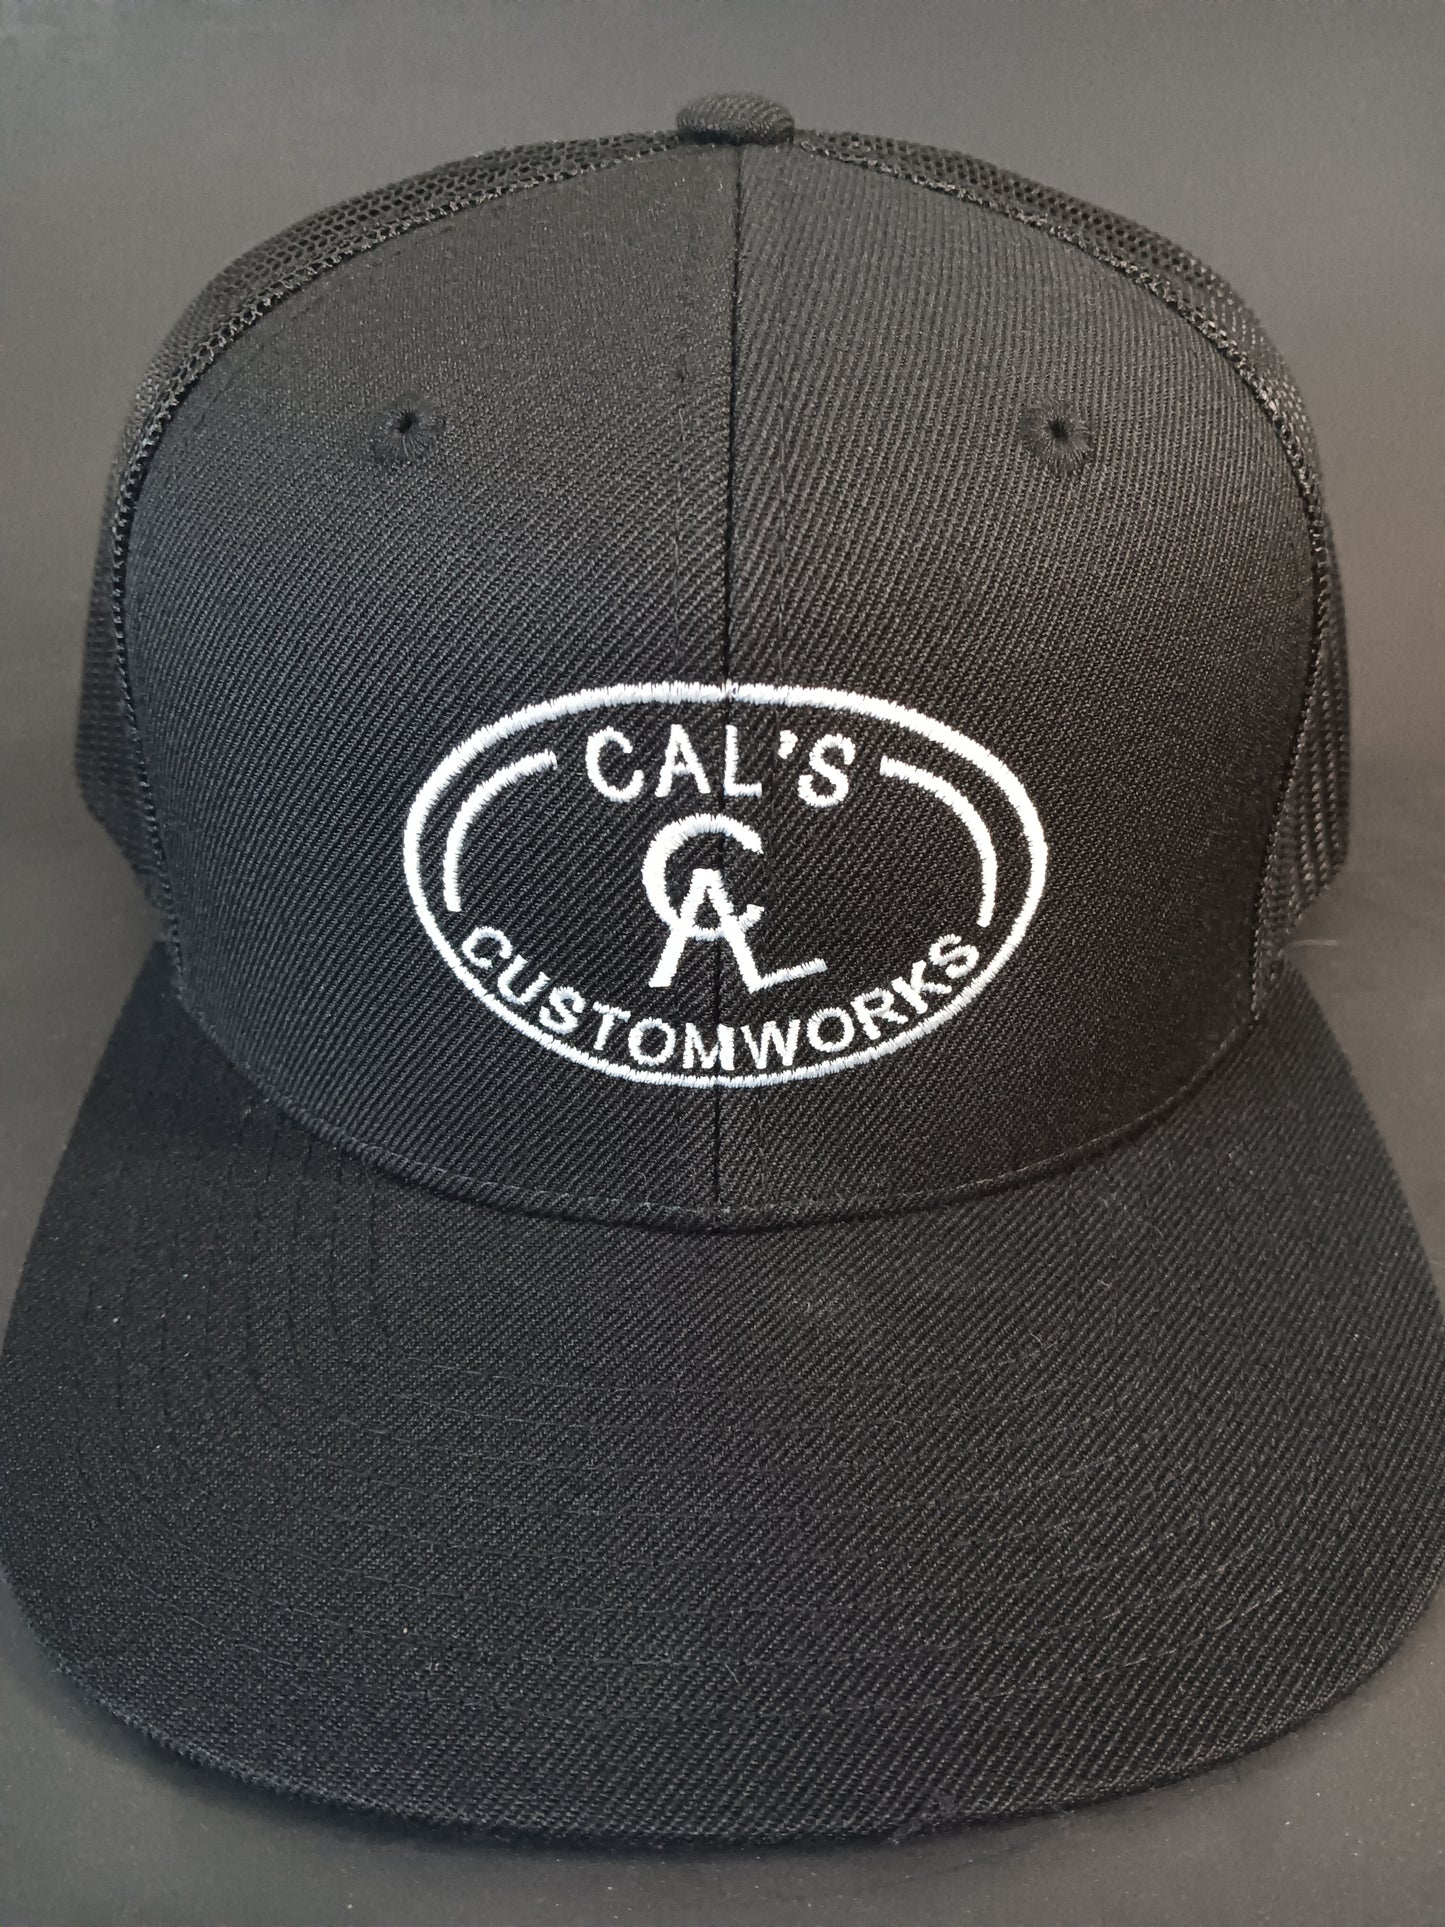 Cal's Customworks Hat